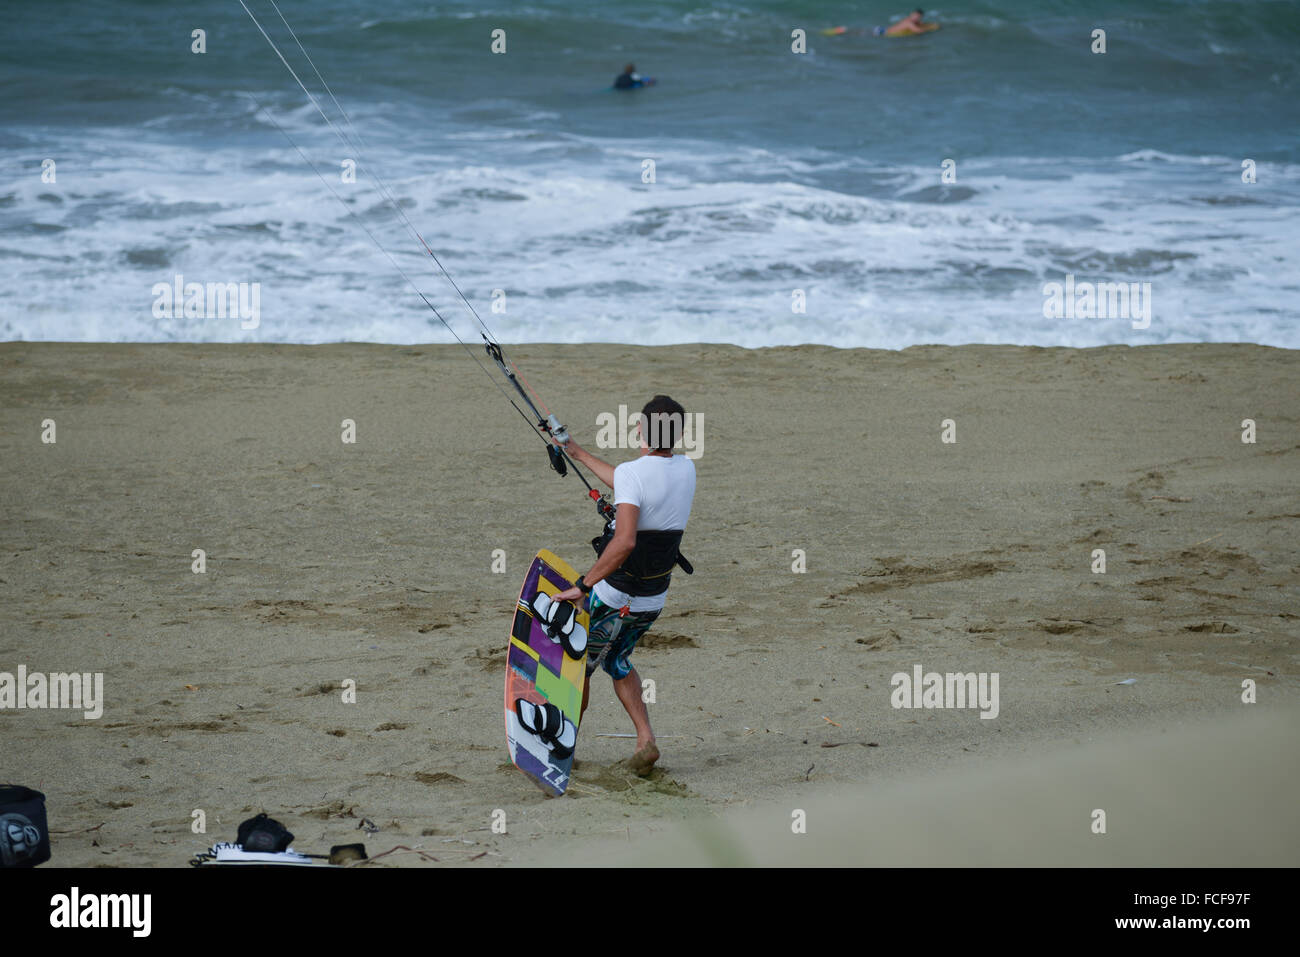 Kitesurfer maschio ottenere pronto. Dorado, Puerto Rico. Isola dei caraibi. Territorio statunitense. Foto Stock